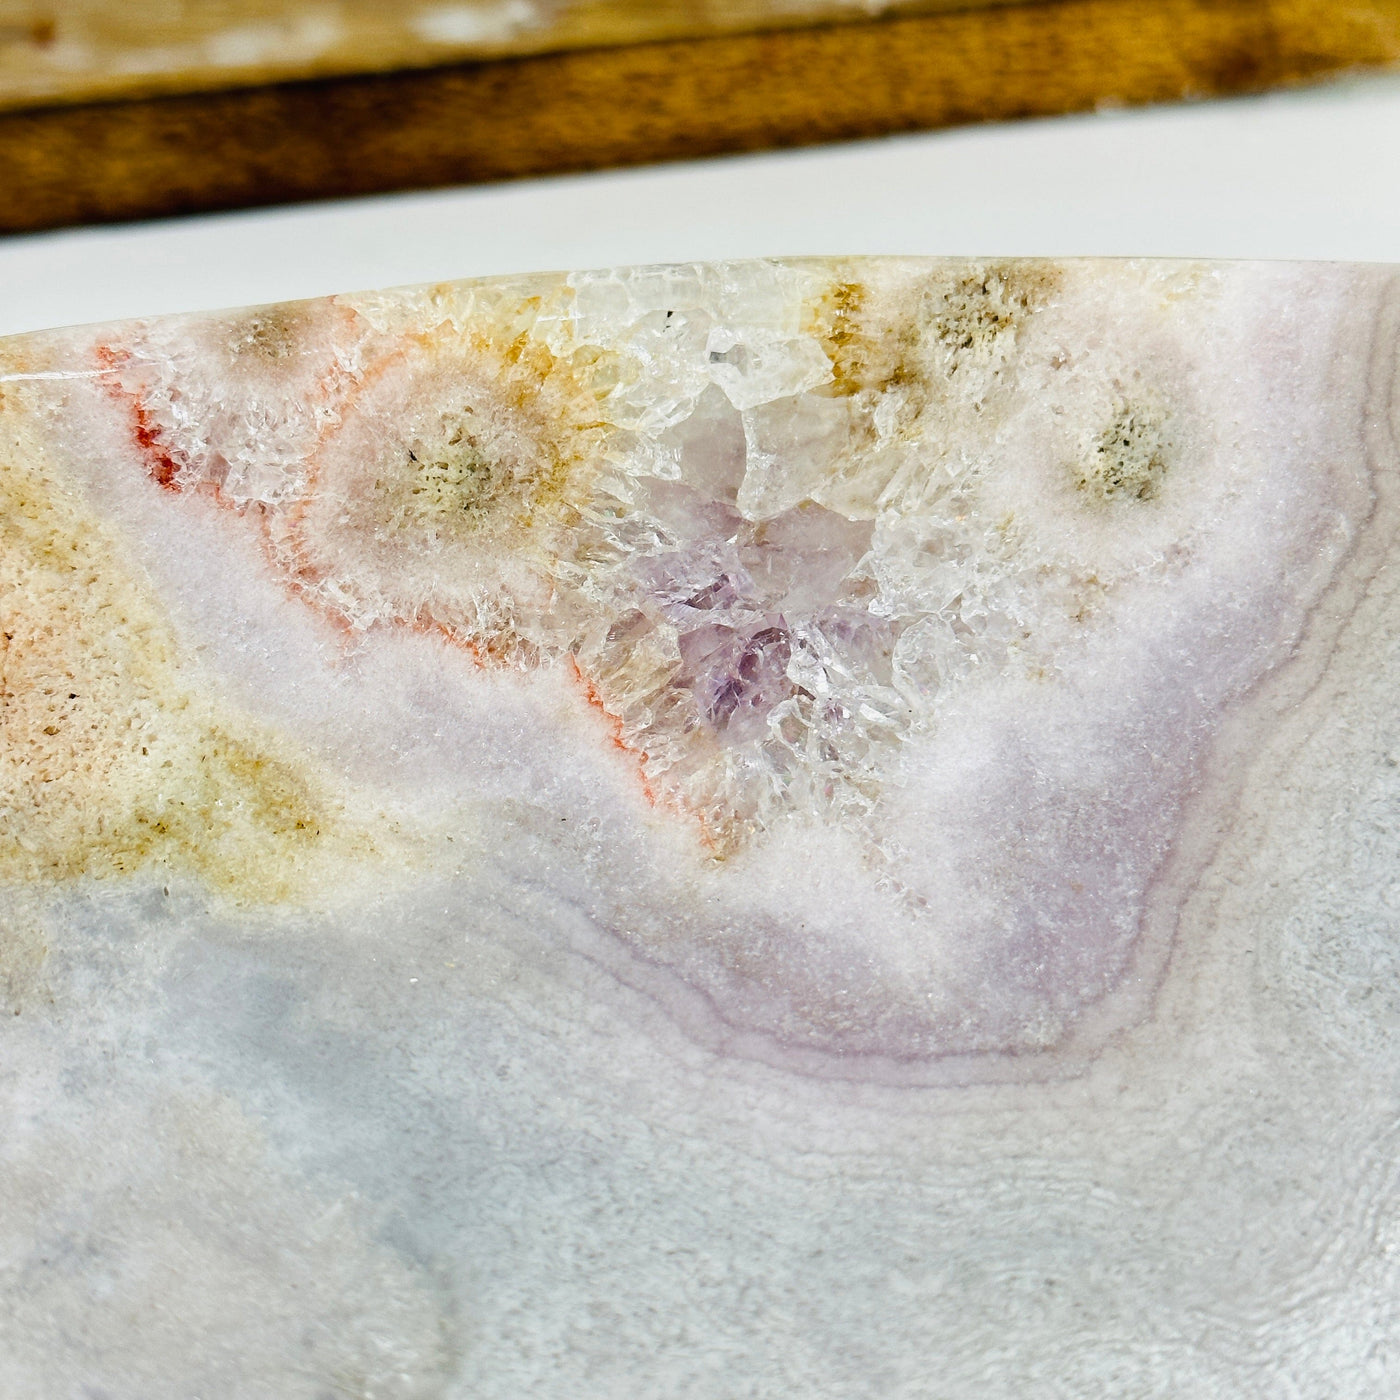 up close shot of pink amethyst